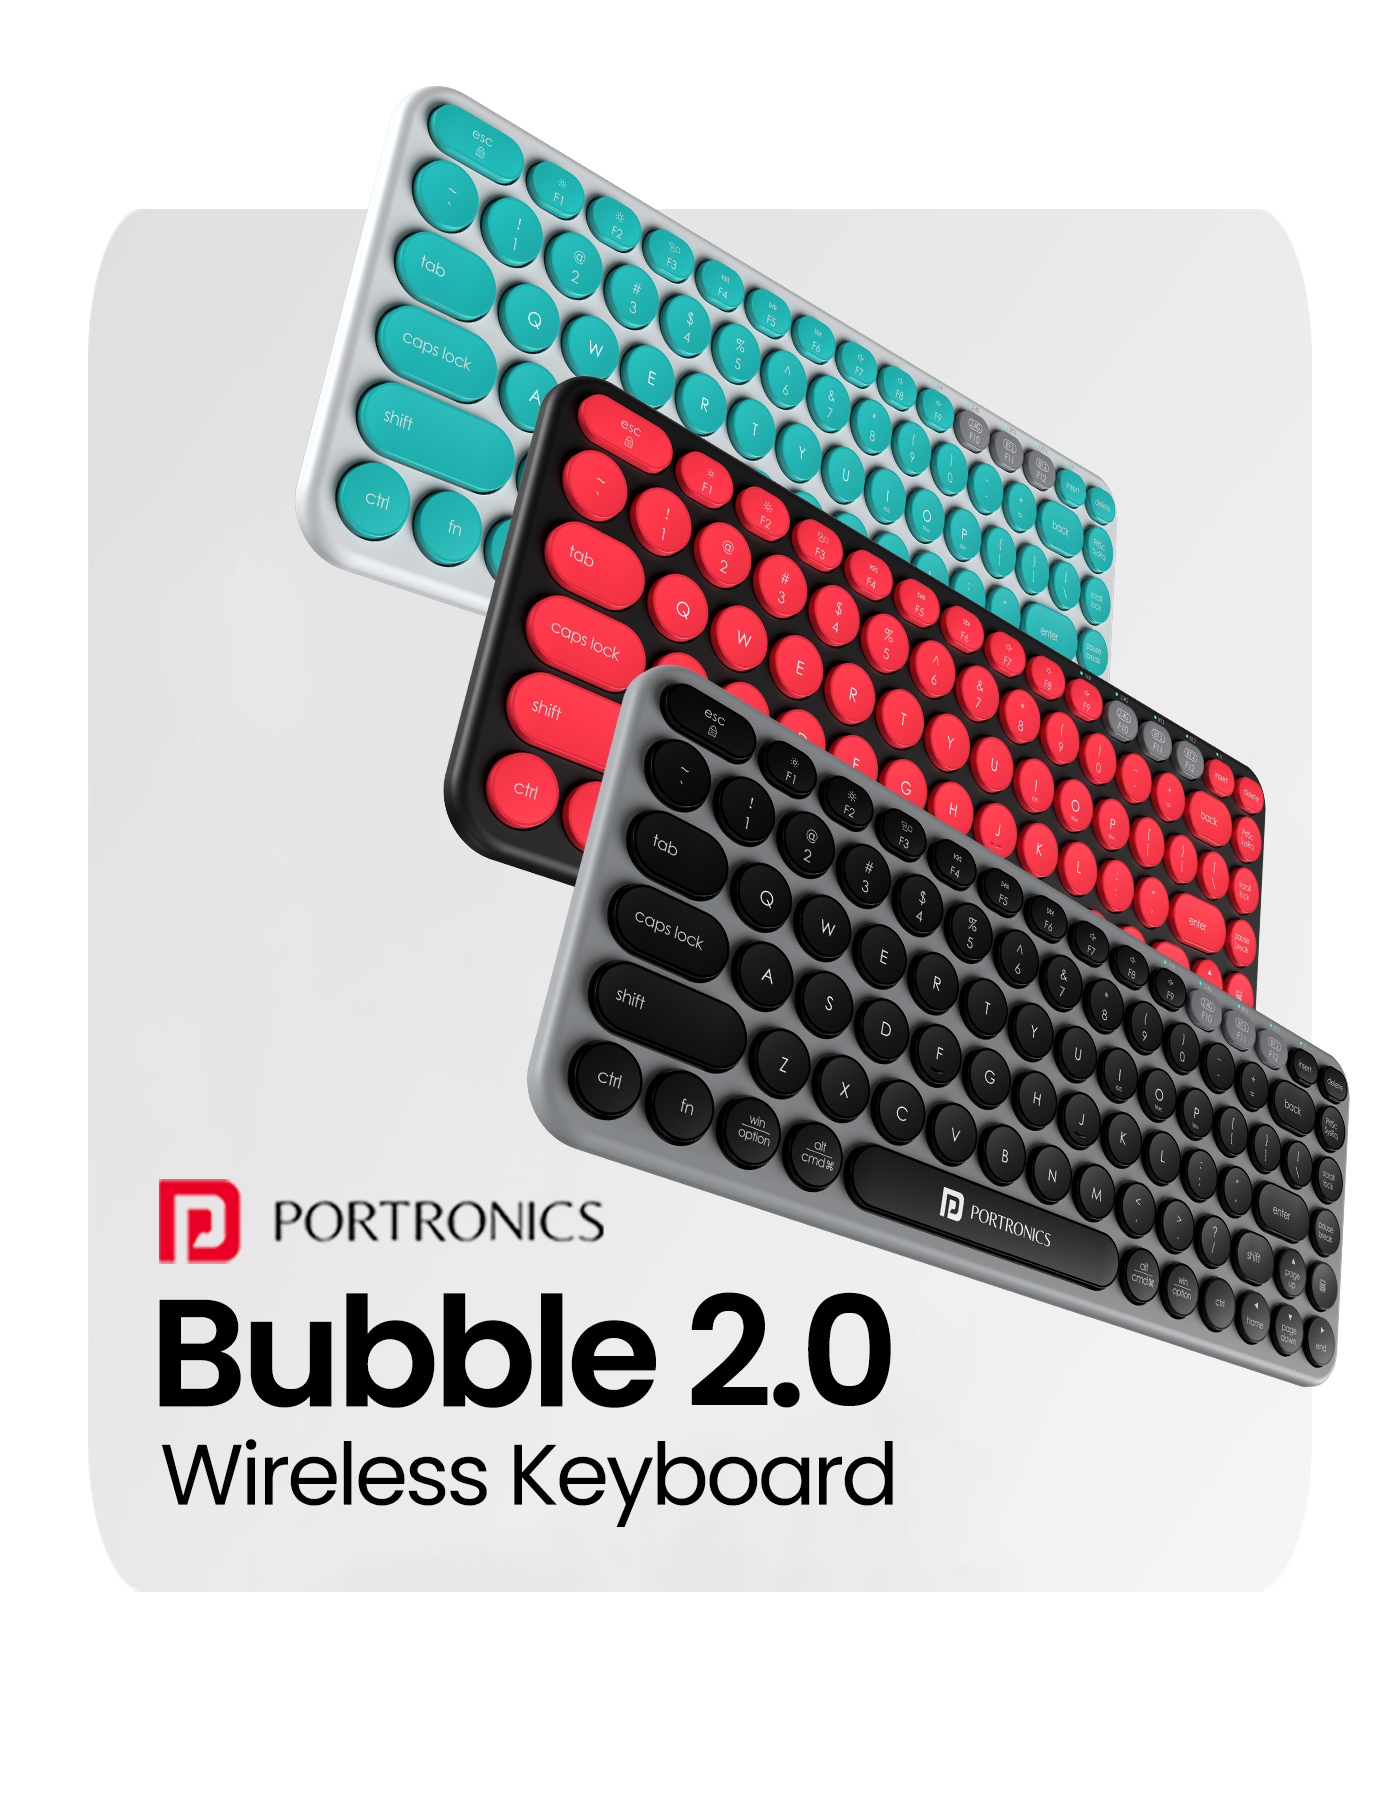 Portronics Bubble 2.0 laptop Wireless keyboard upto 10 meter range